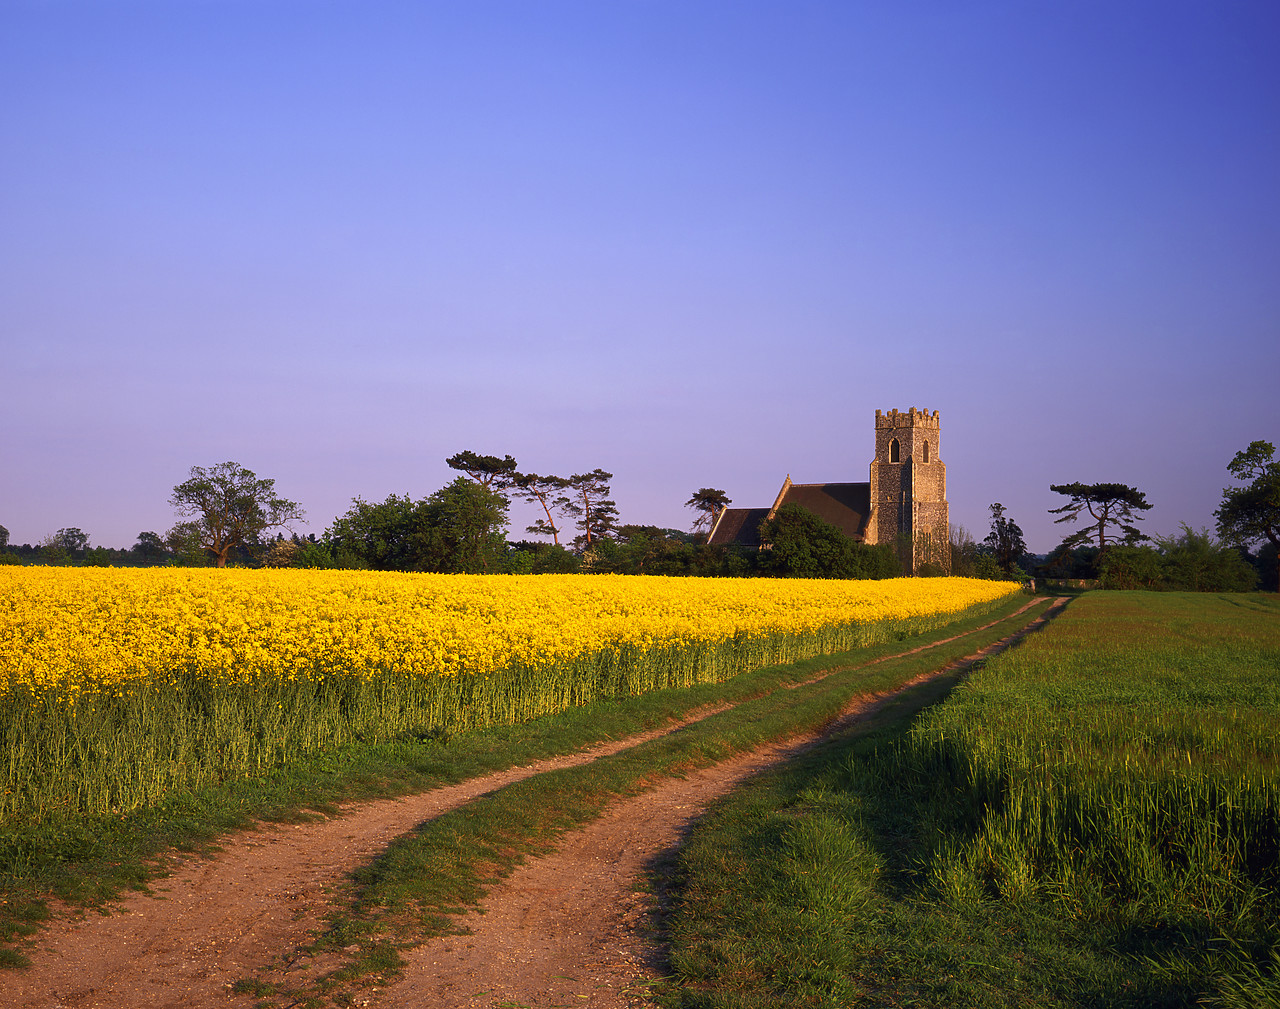 #970157-1 - Rape Field & Church, Broome, Norfolk, England